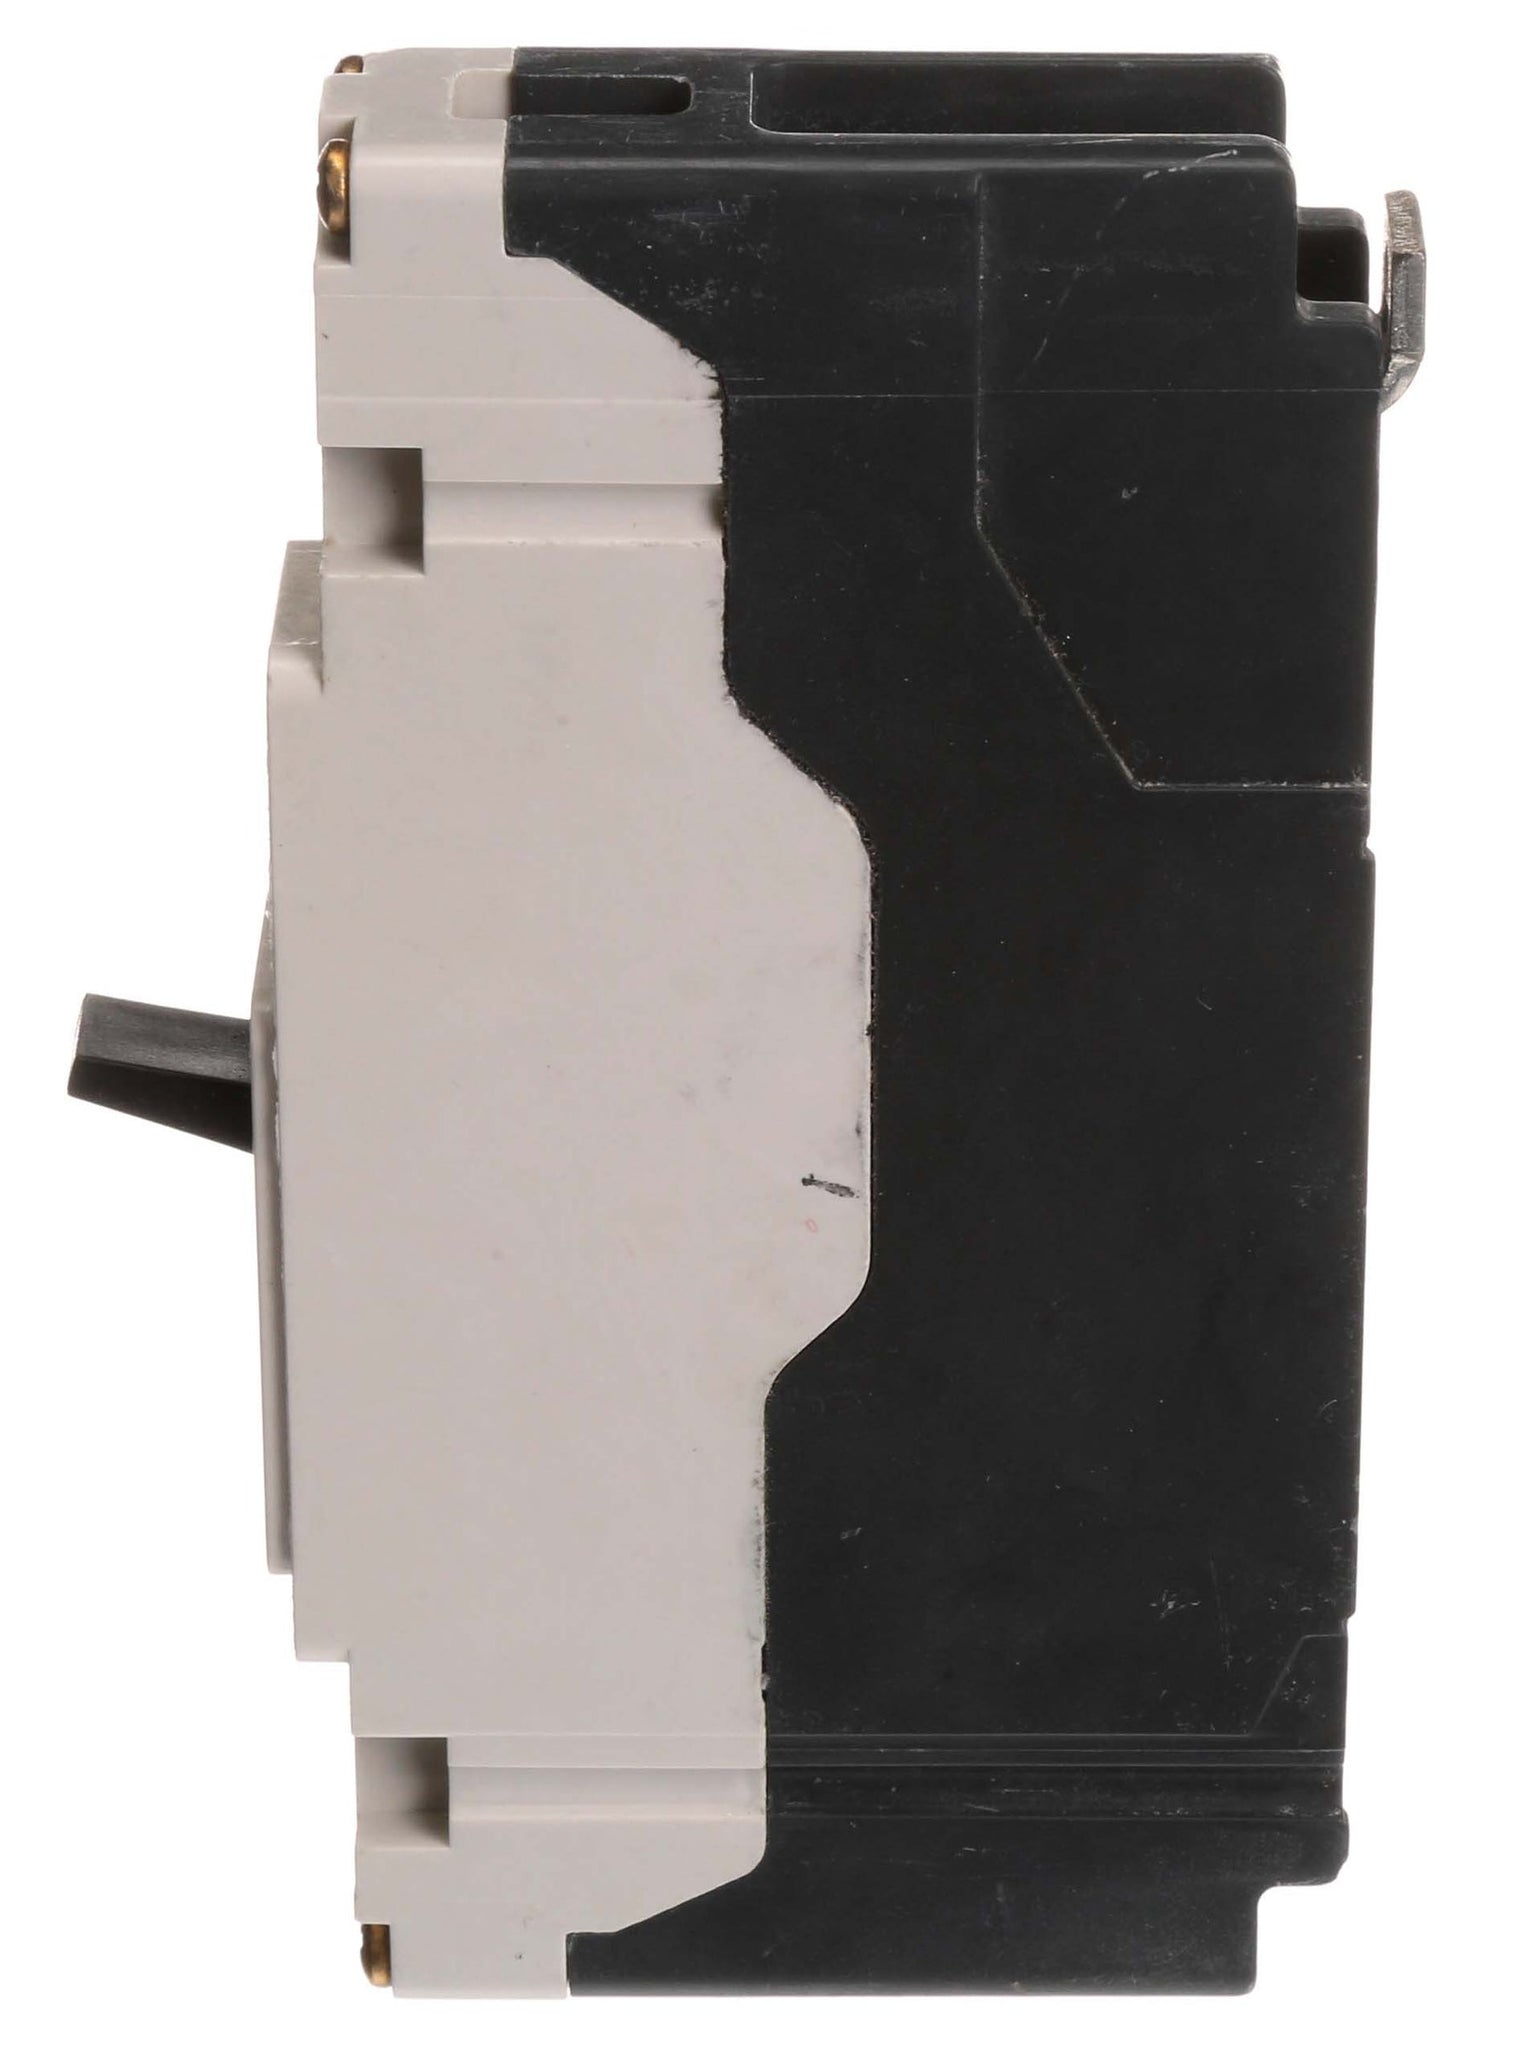 NEB1B060B - Siemens - Molded Case